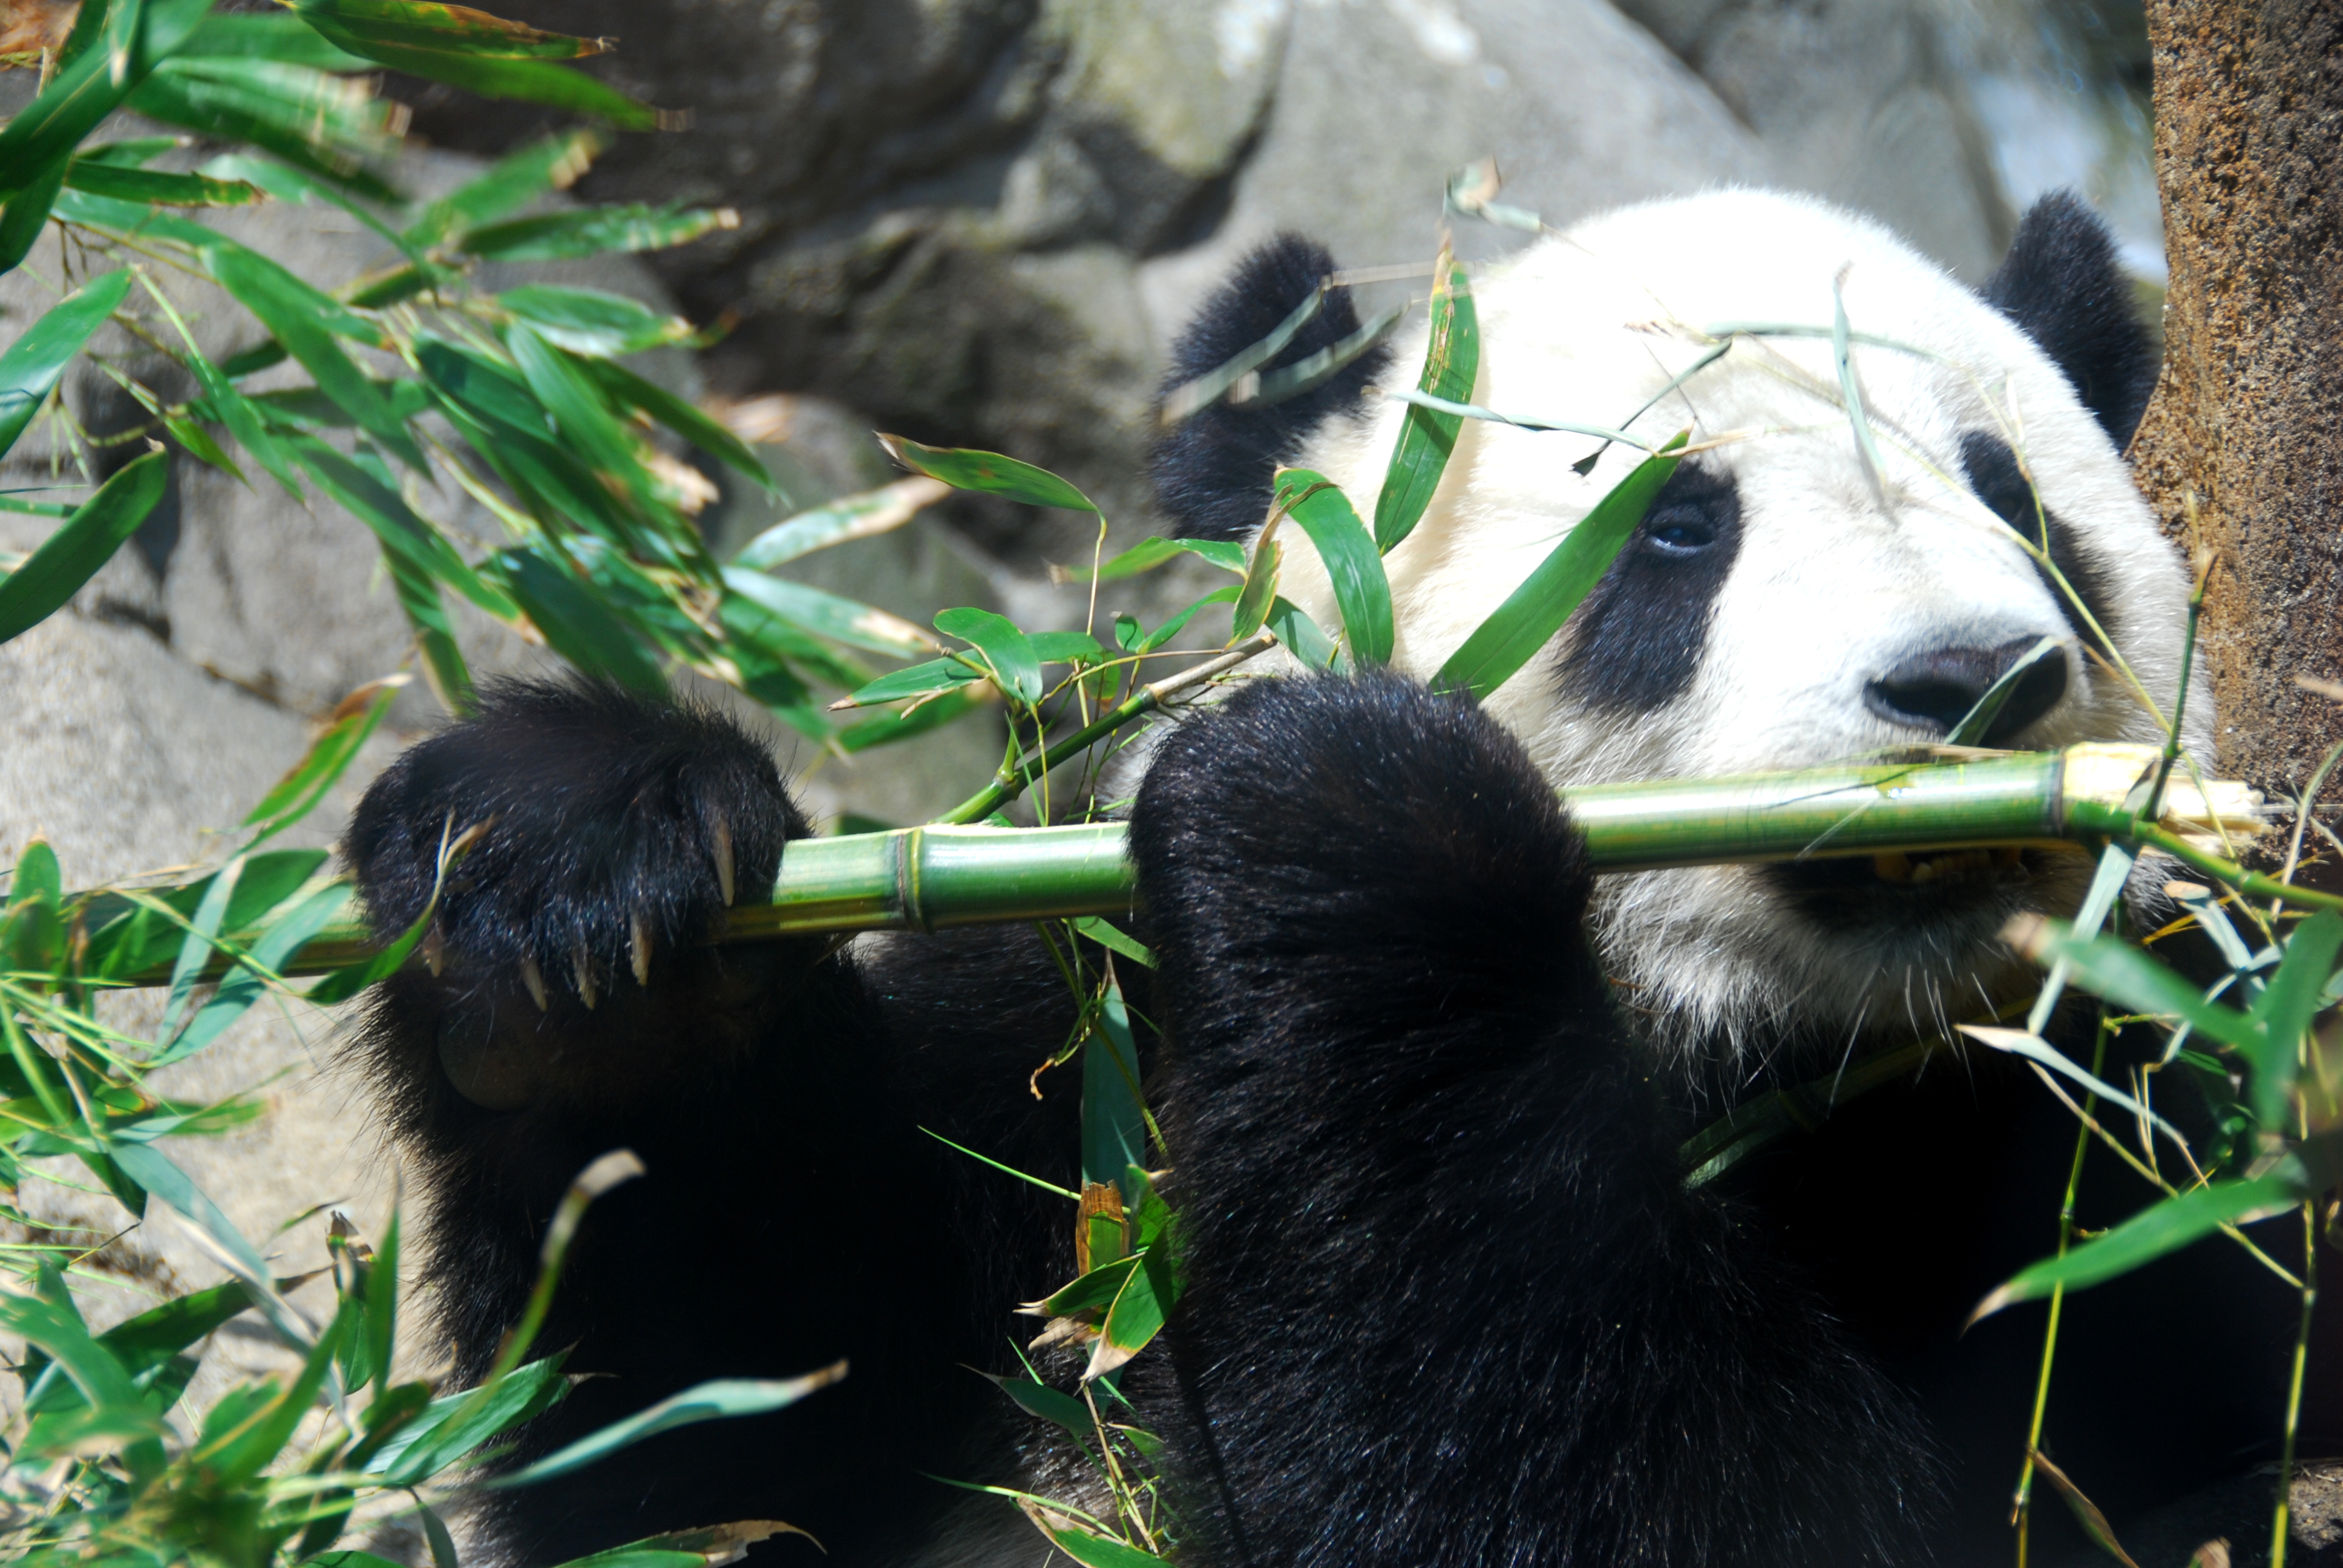 Giant Panda no longer 'endangered' thanks to conservation efforts in ...